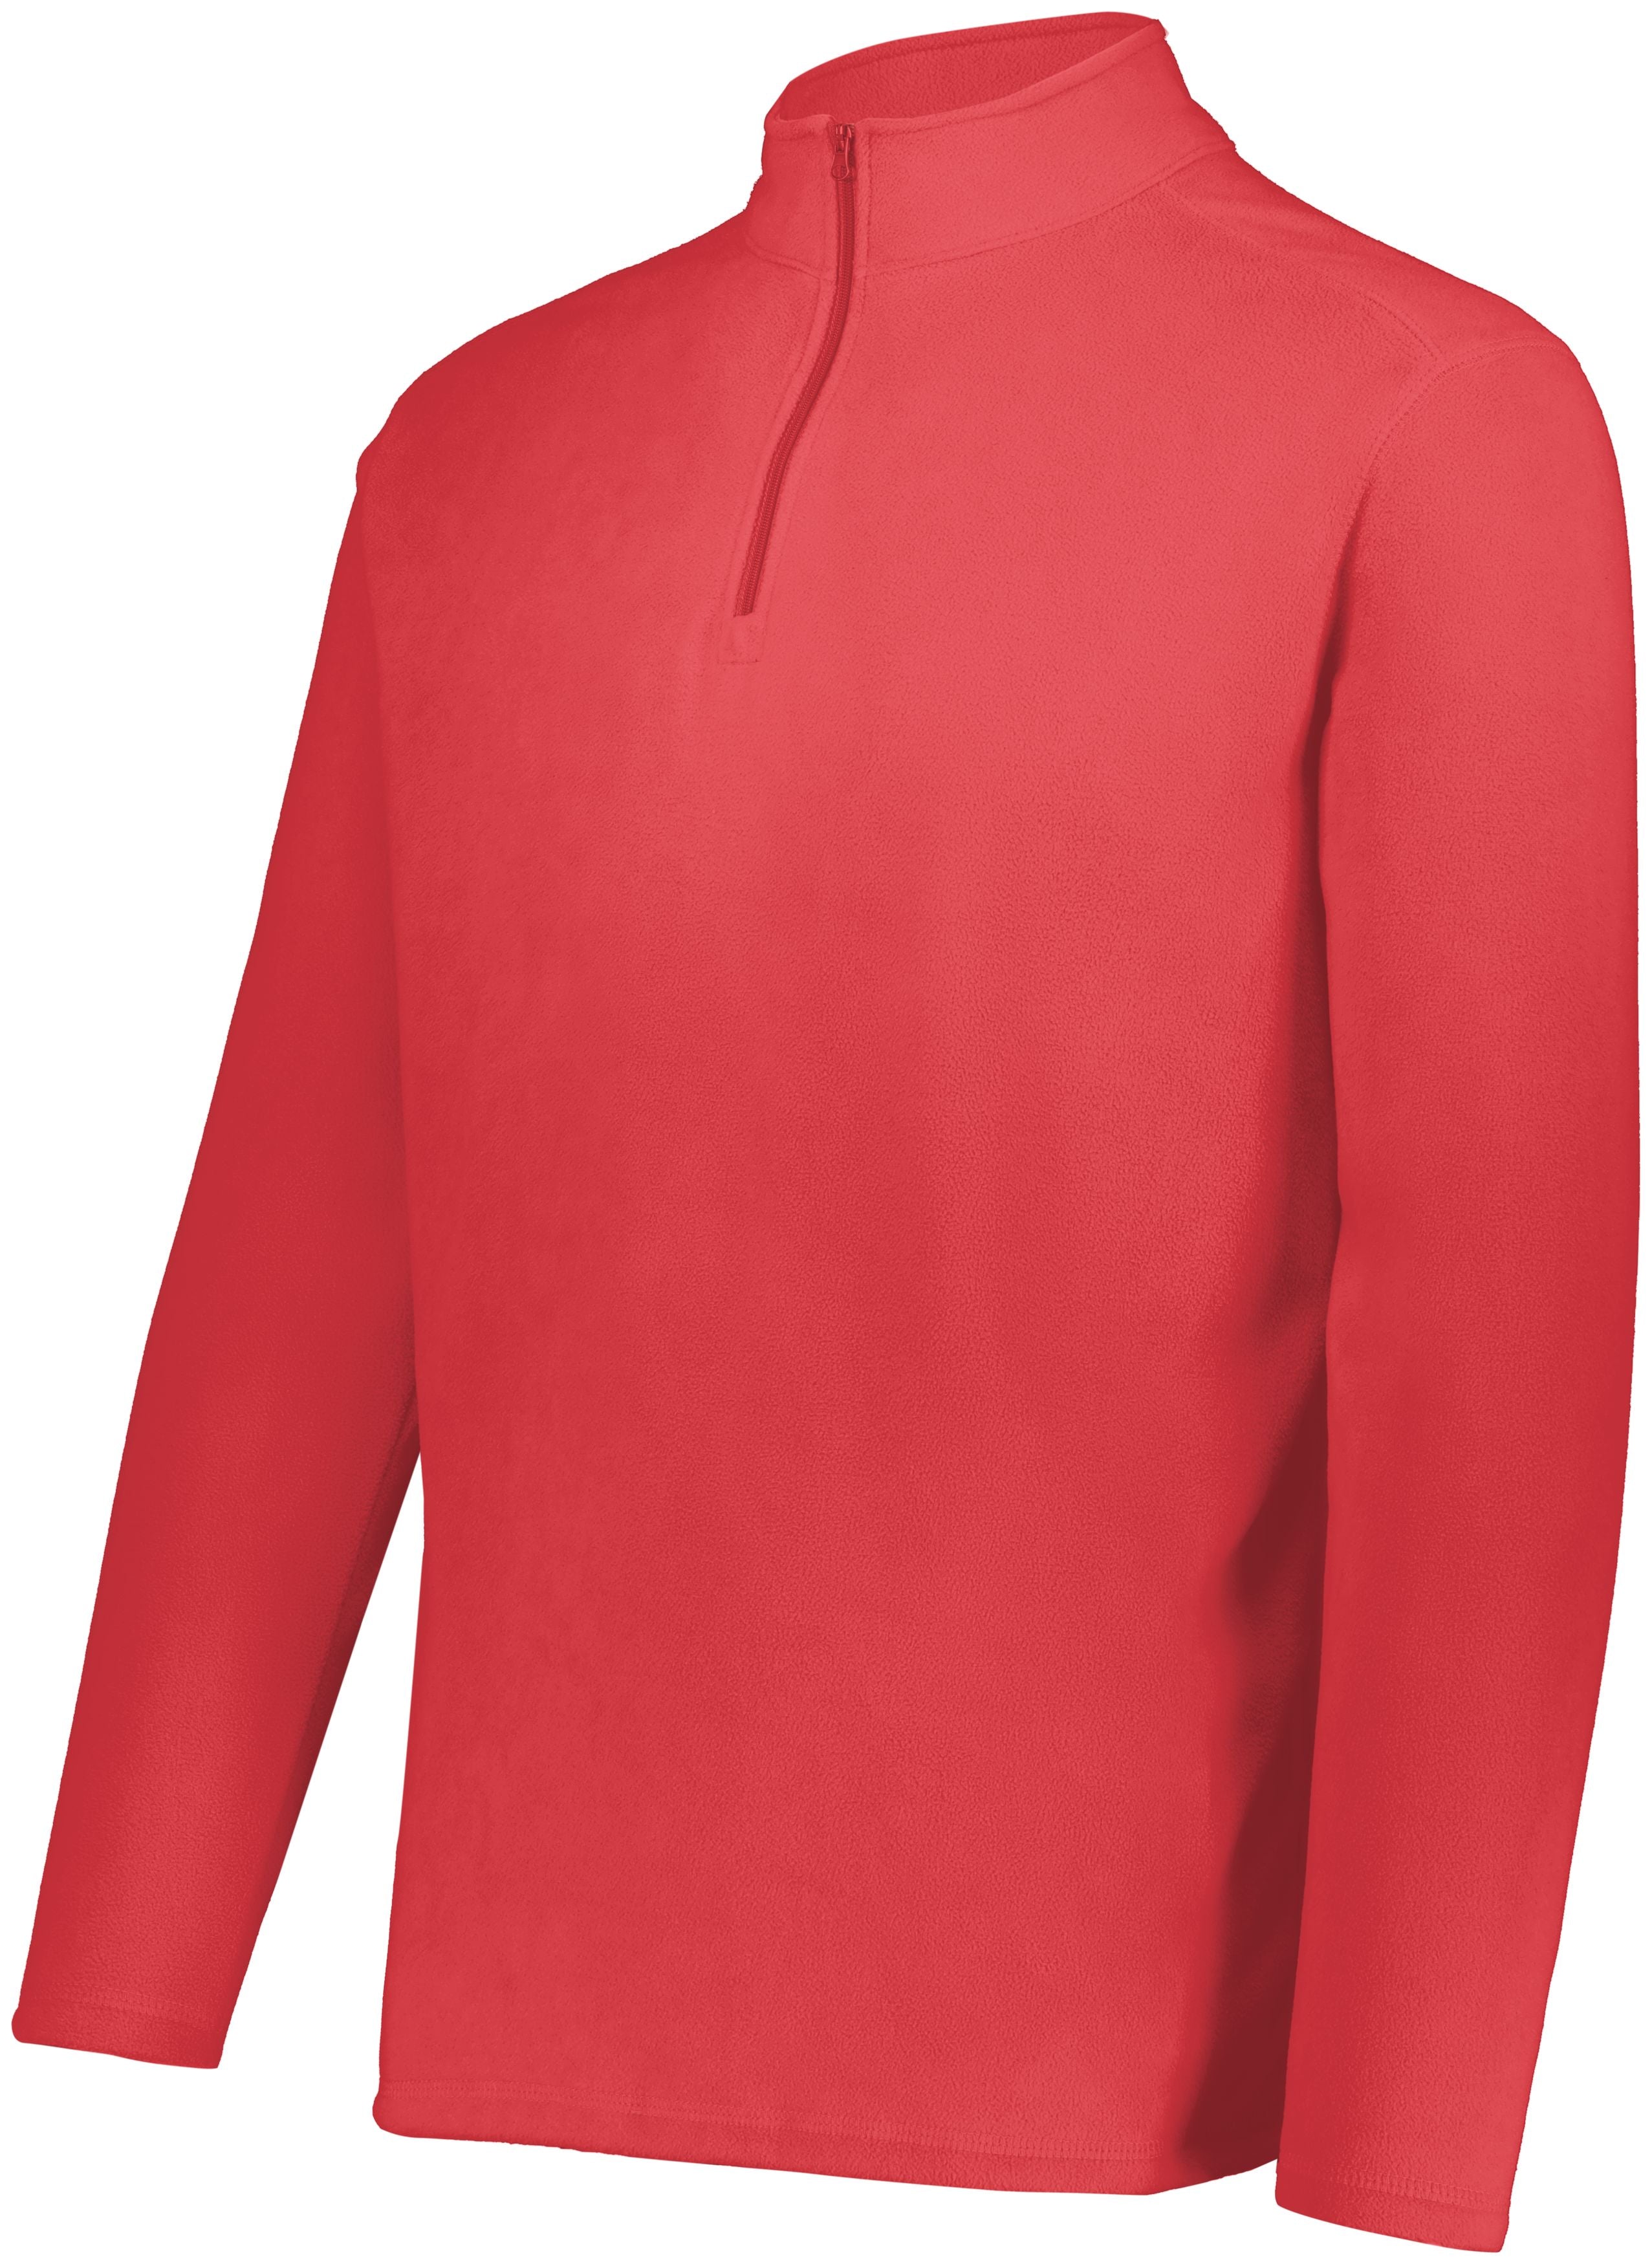 C3) 6863 Augusta Sportswear Micro-Lite Fleece 1/4 Zip Pullover - CONNECT WORK TOOLS